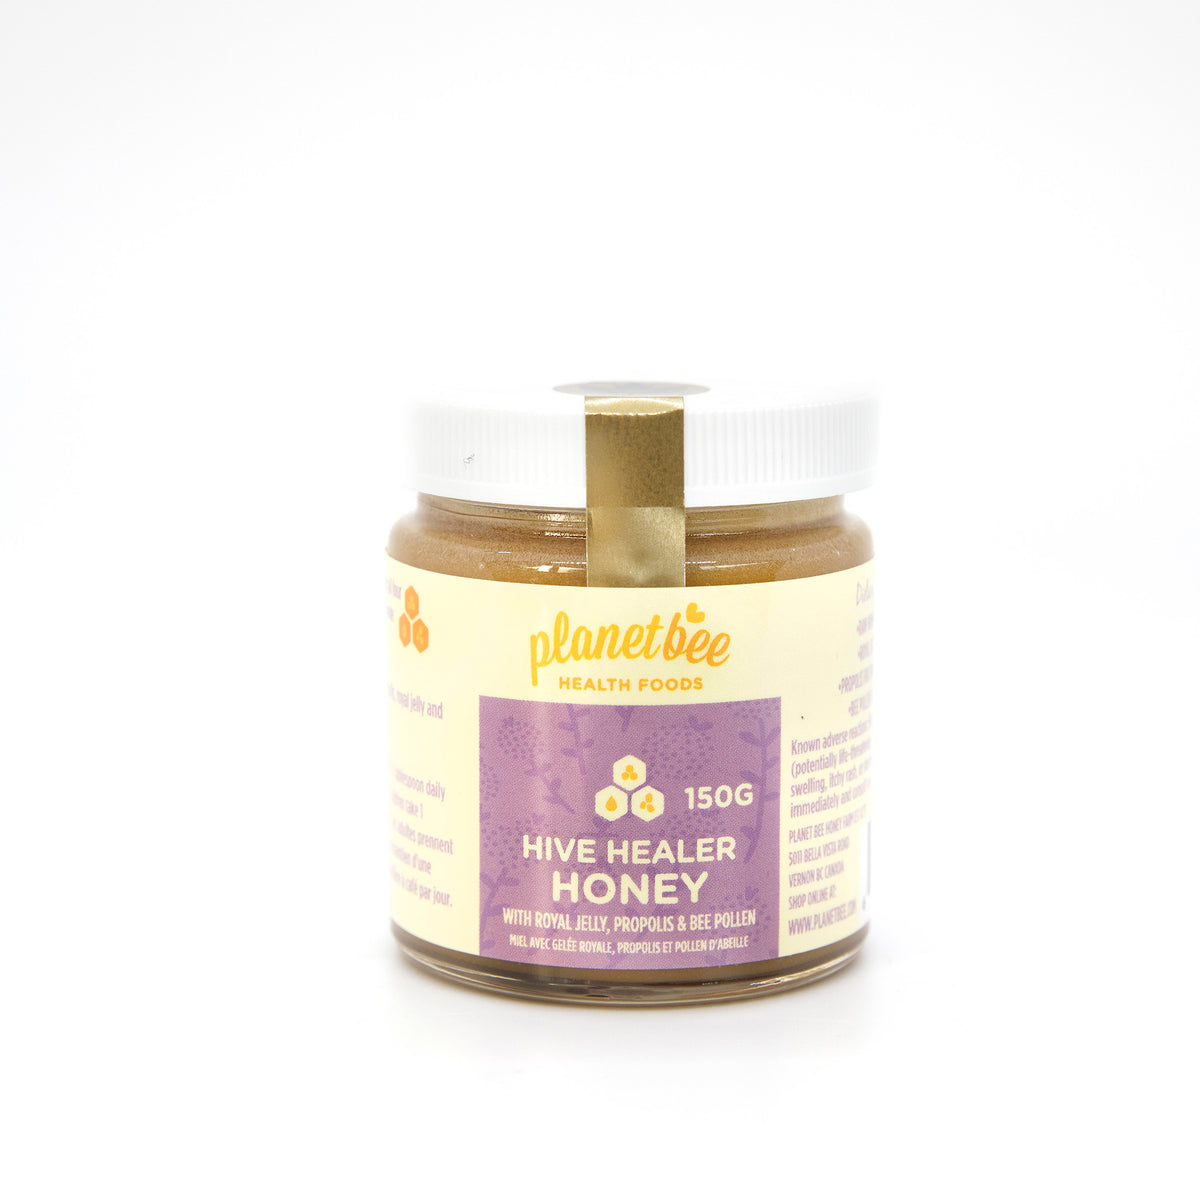 hive healer honey propolis pollen royal jelly in honey